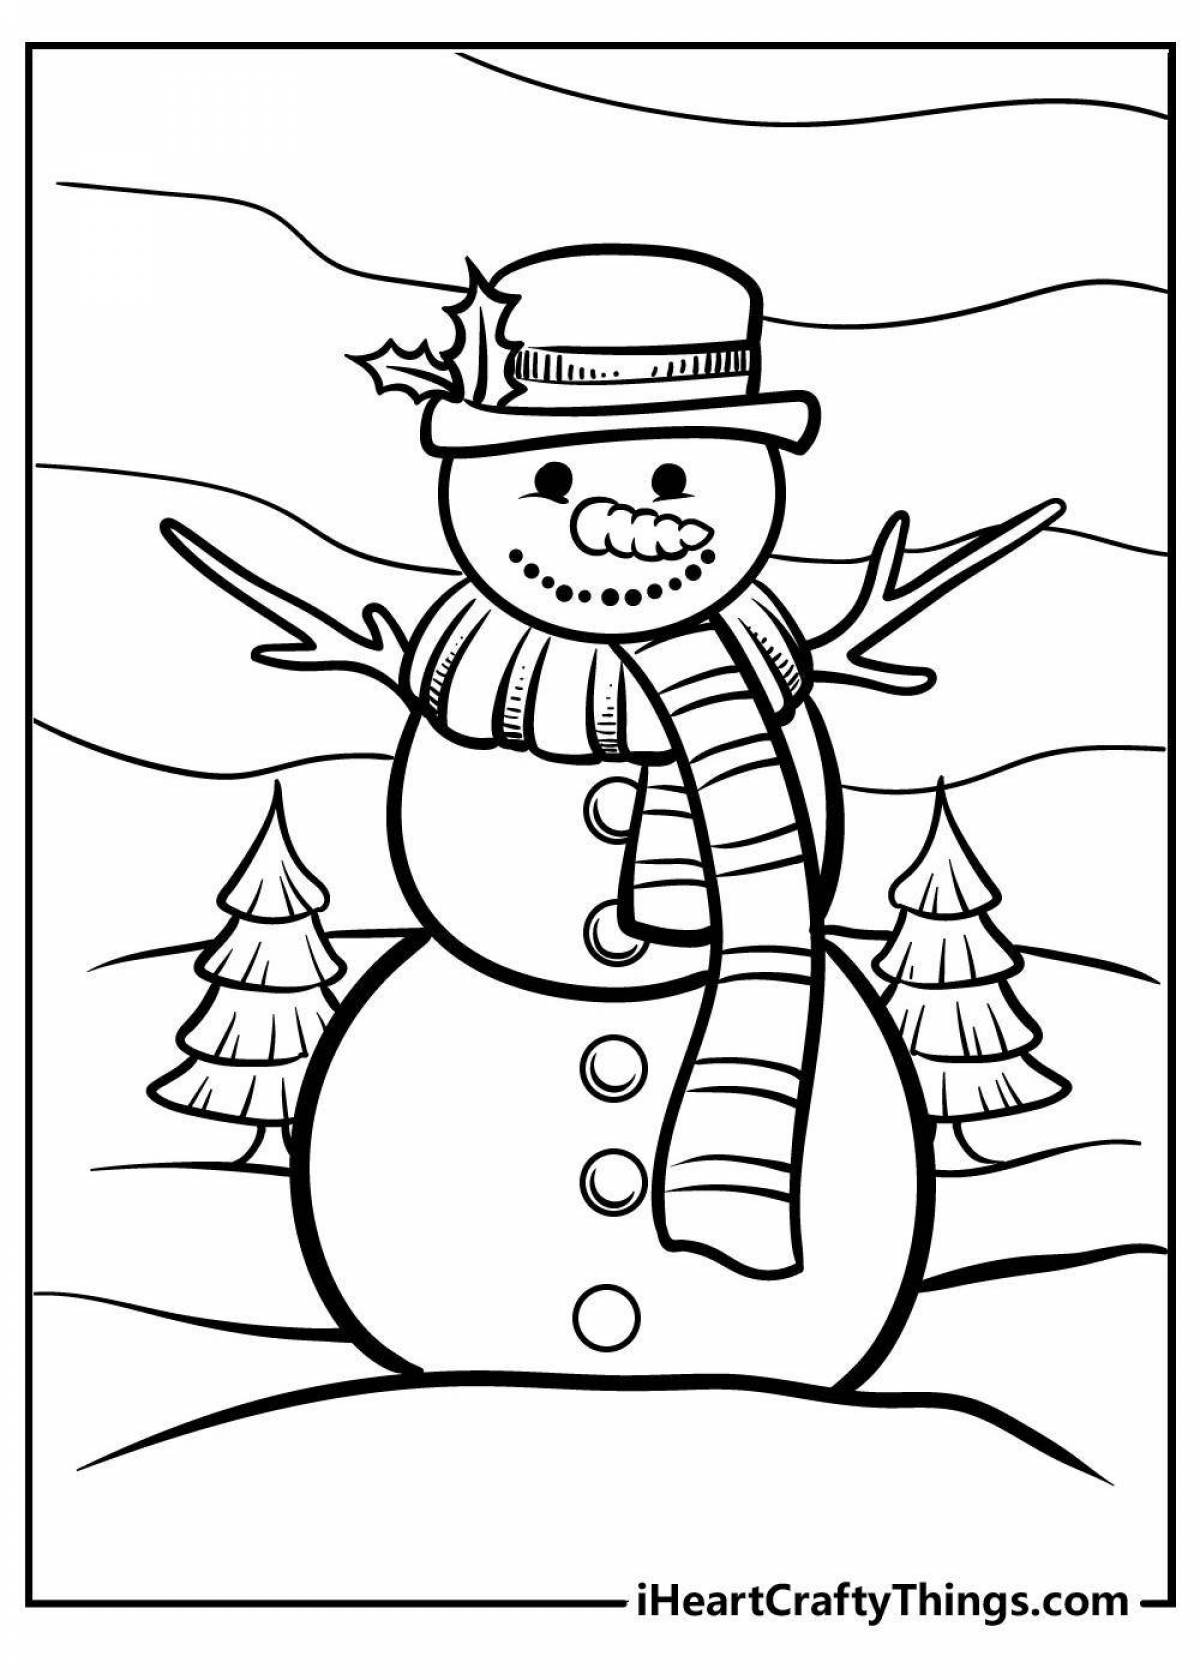 Fancy coloring cute snowman